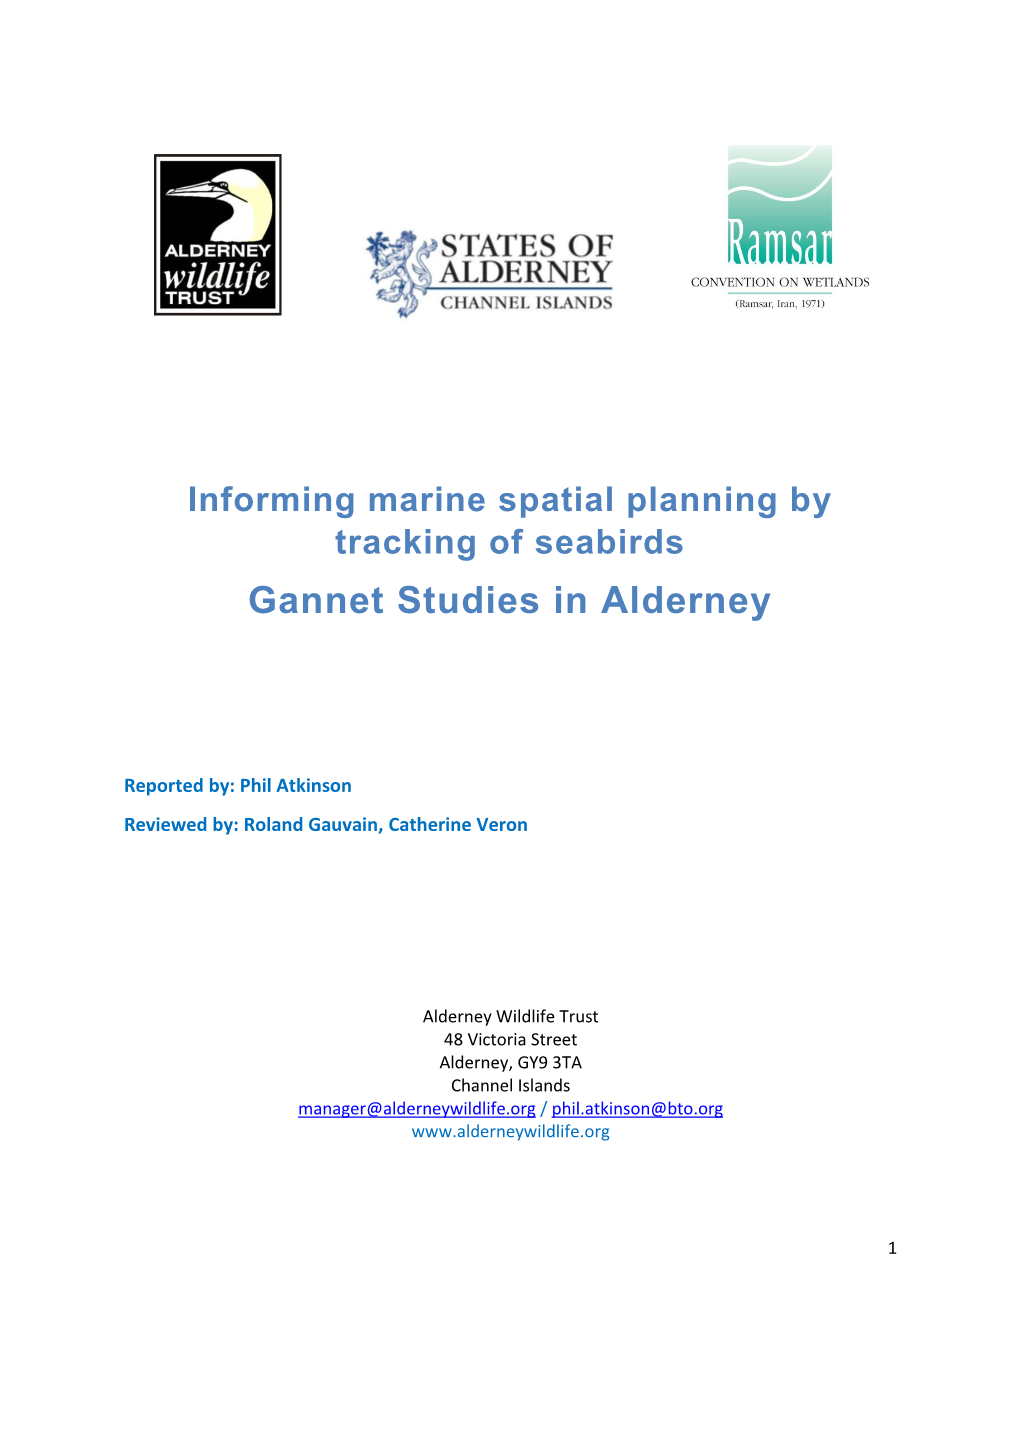 Gannet Studies in Alderney